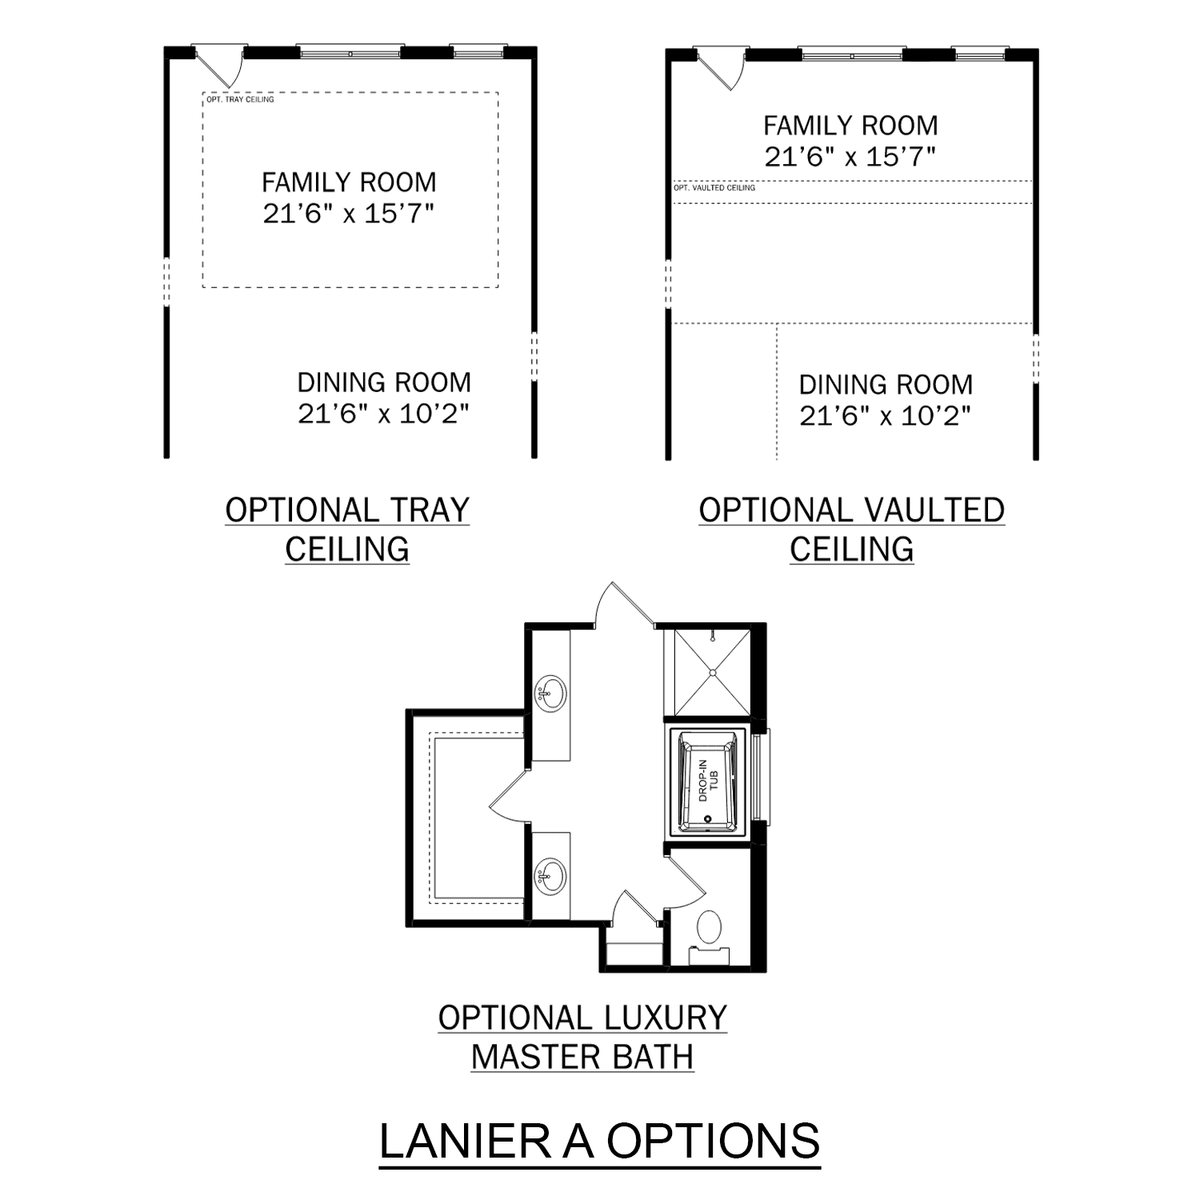 2 - The Lanier floor plan layout for 606 Magnolia Cove Lane SW in Davidson Homes' Magnolia Preserve community.